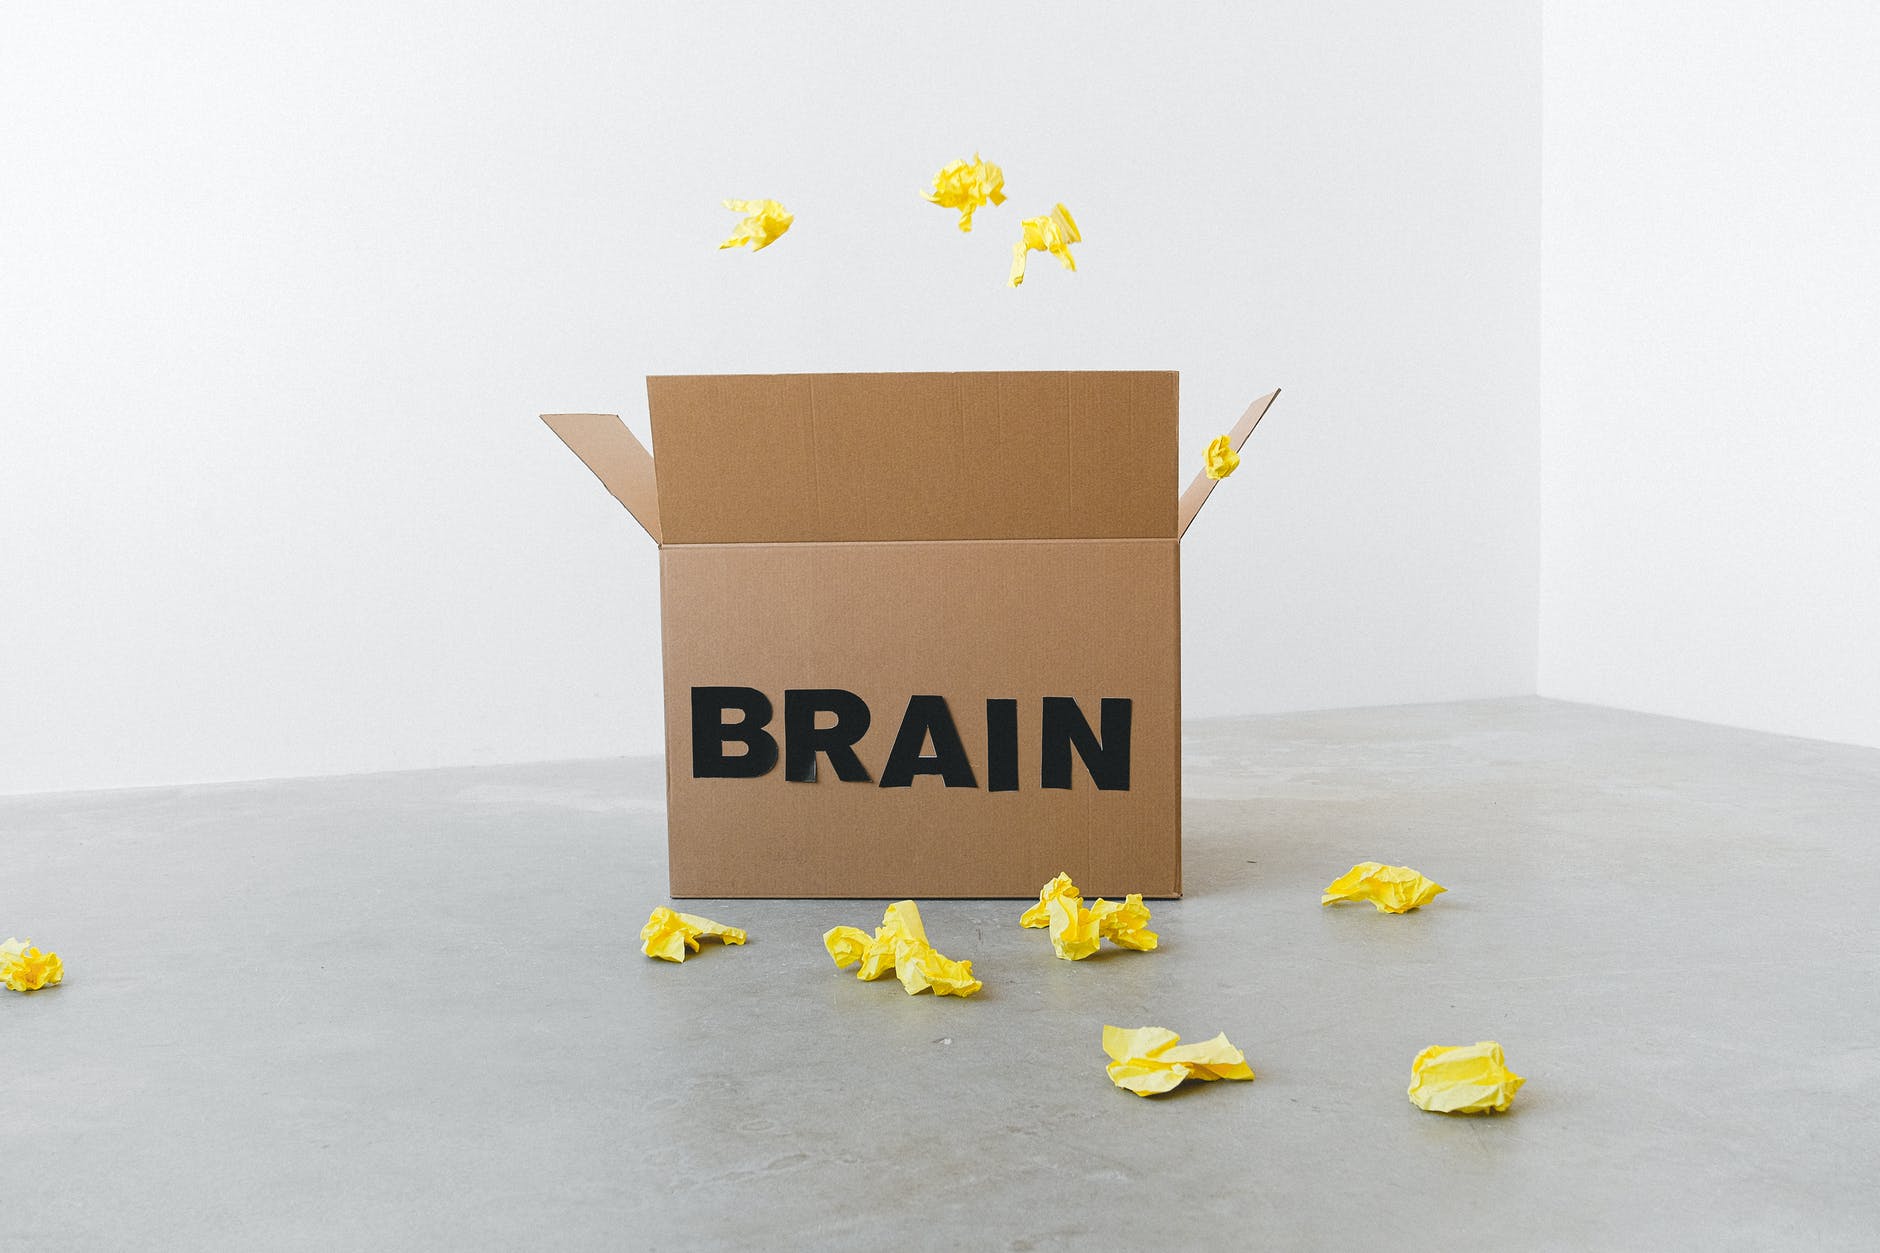 brain inscription on cardboard box under flying paper pieces